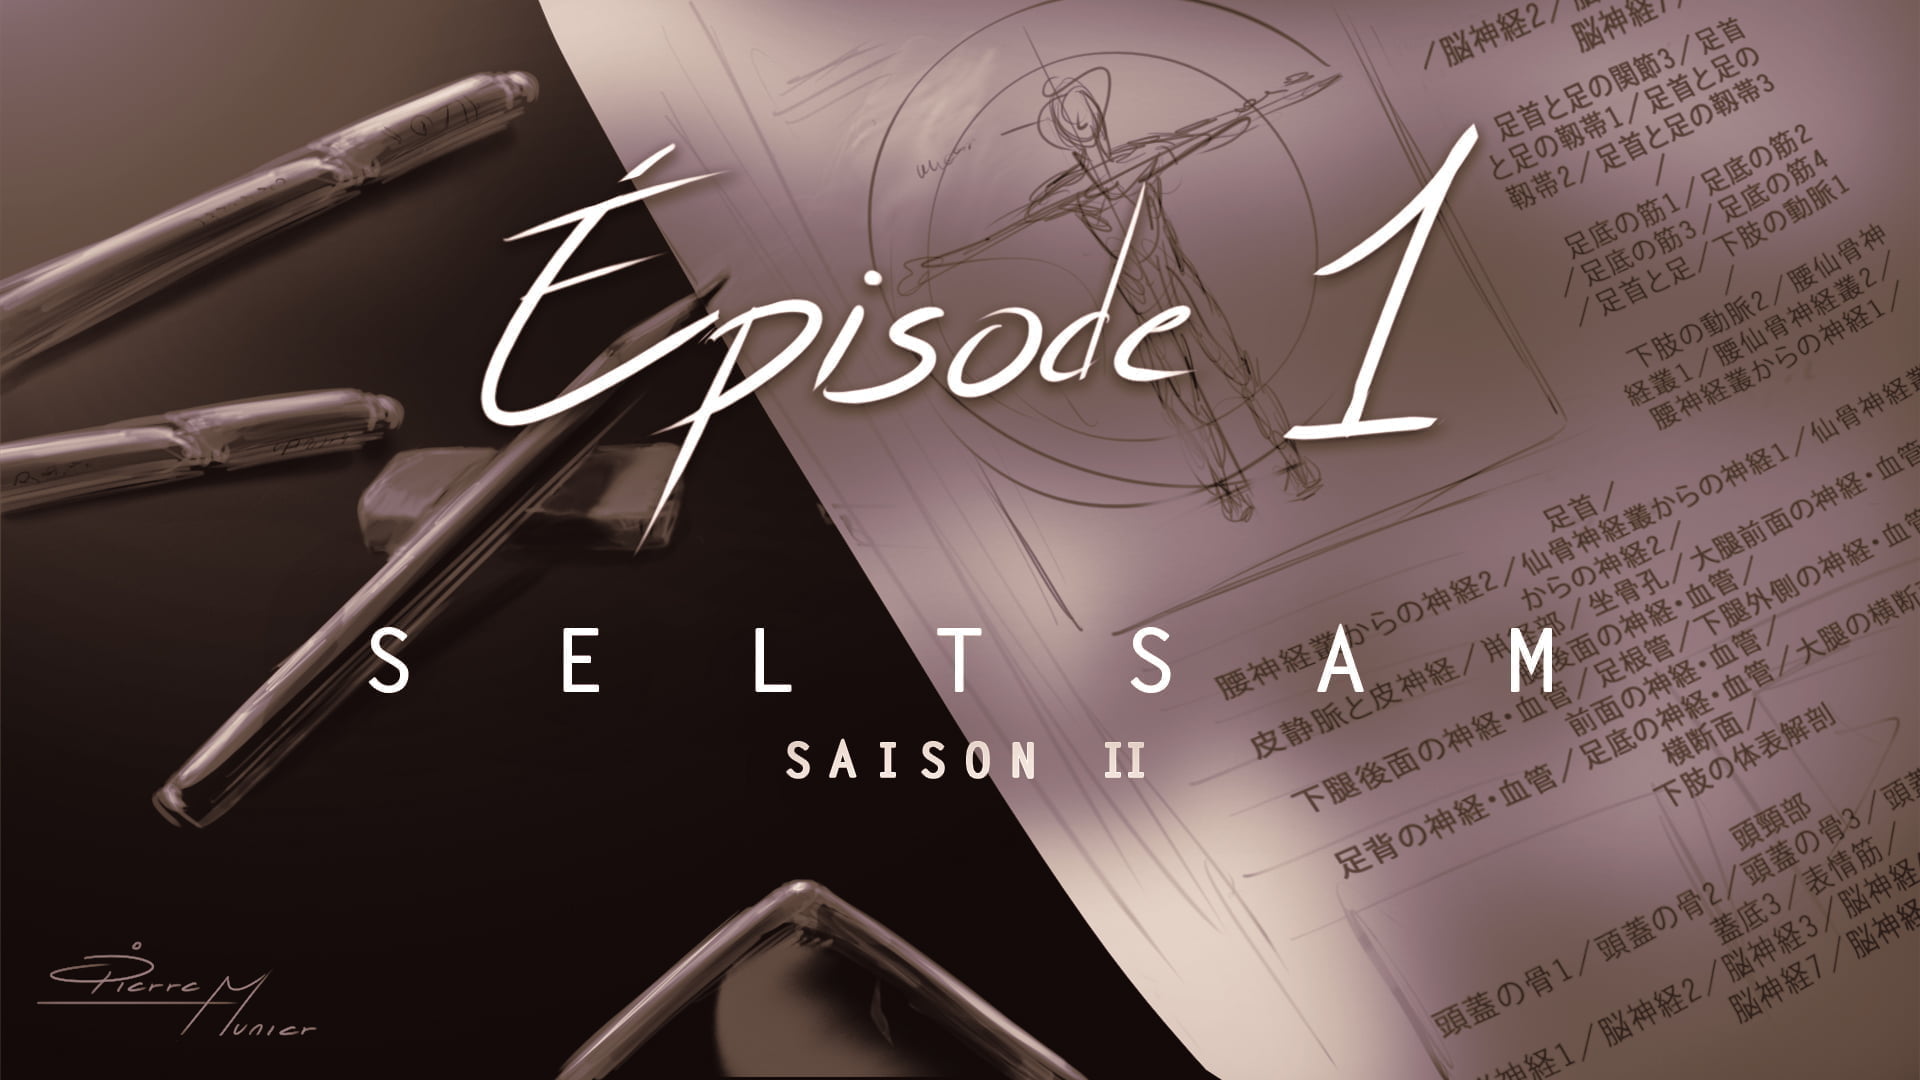 SELTSAM SAISON II Episode 1 - Pierre Munier